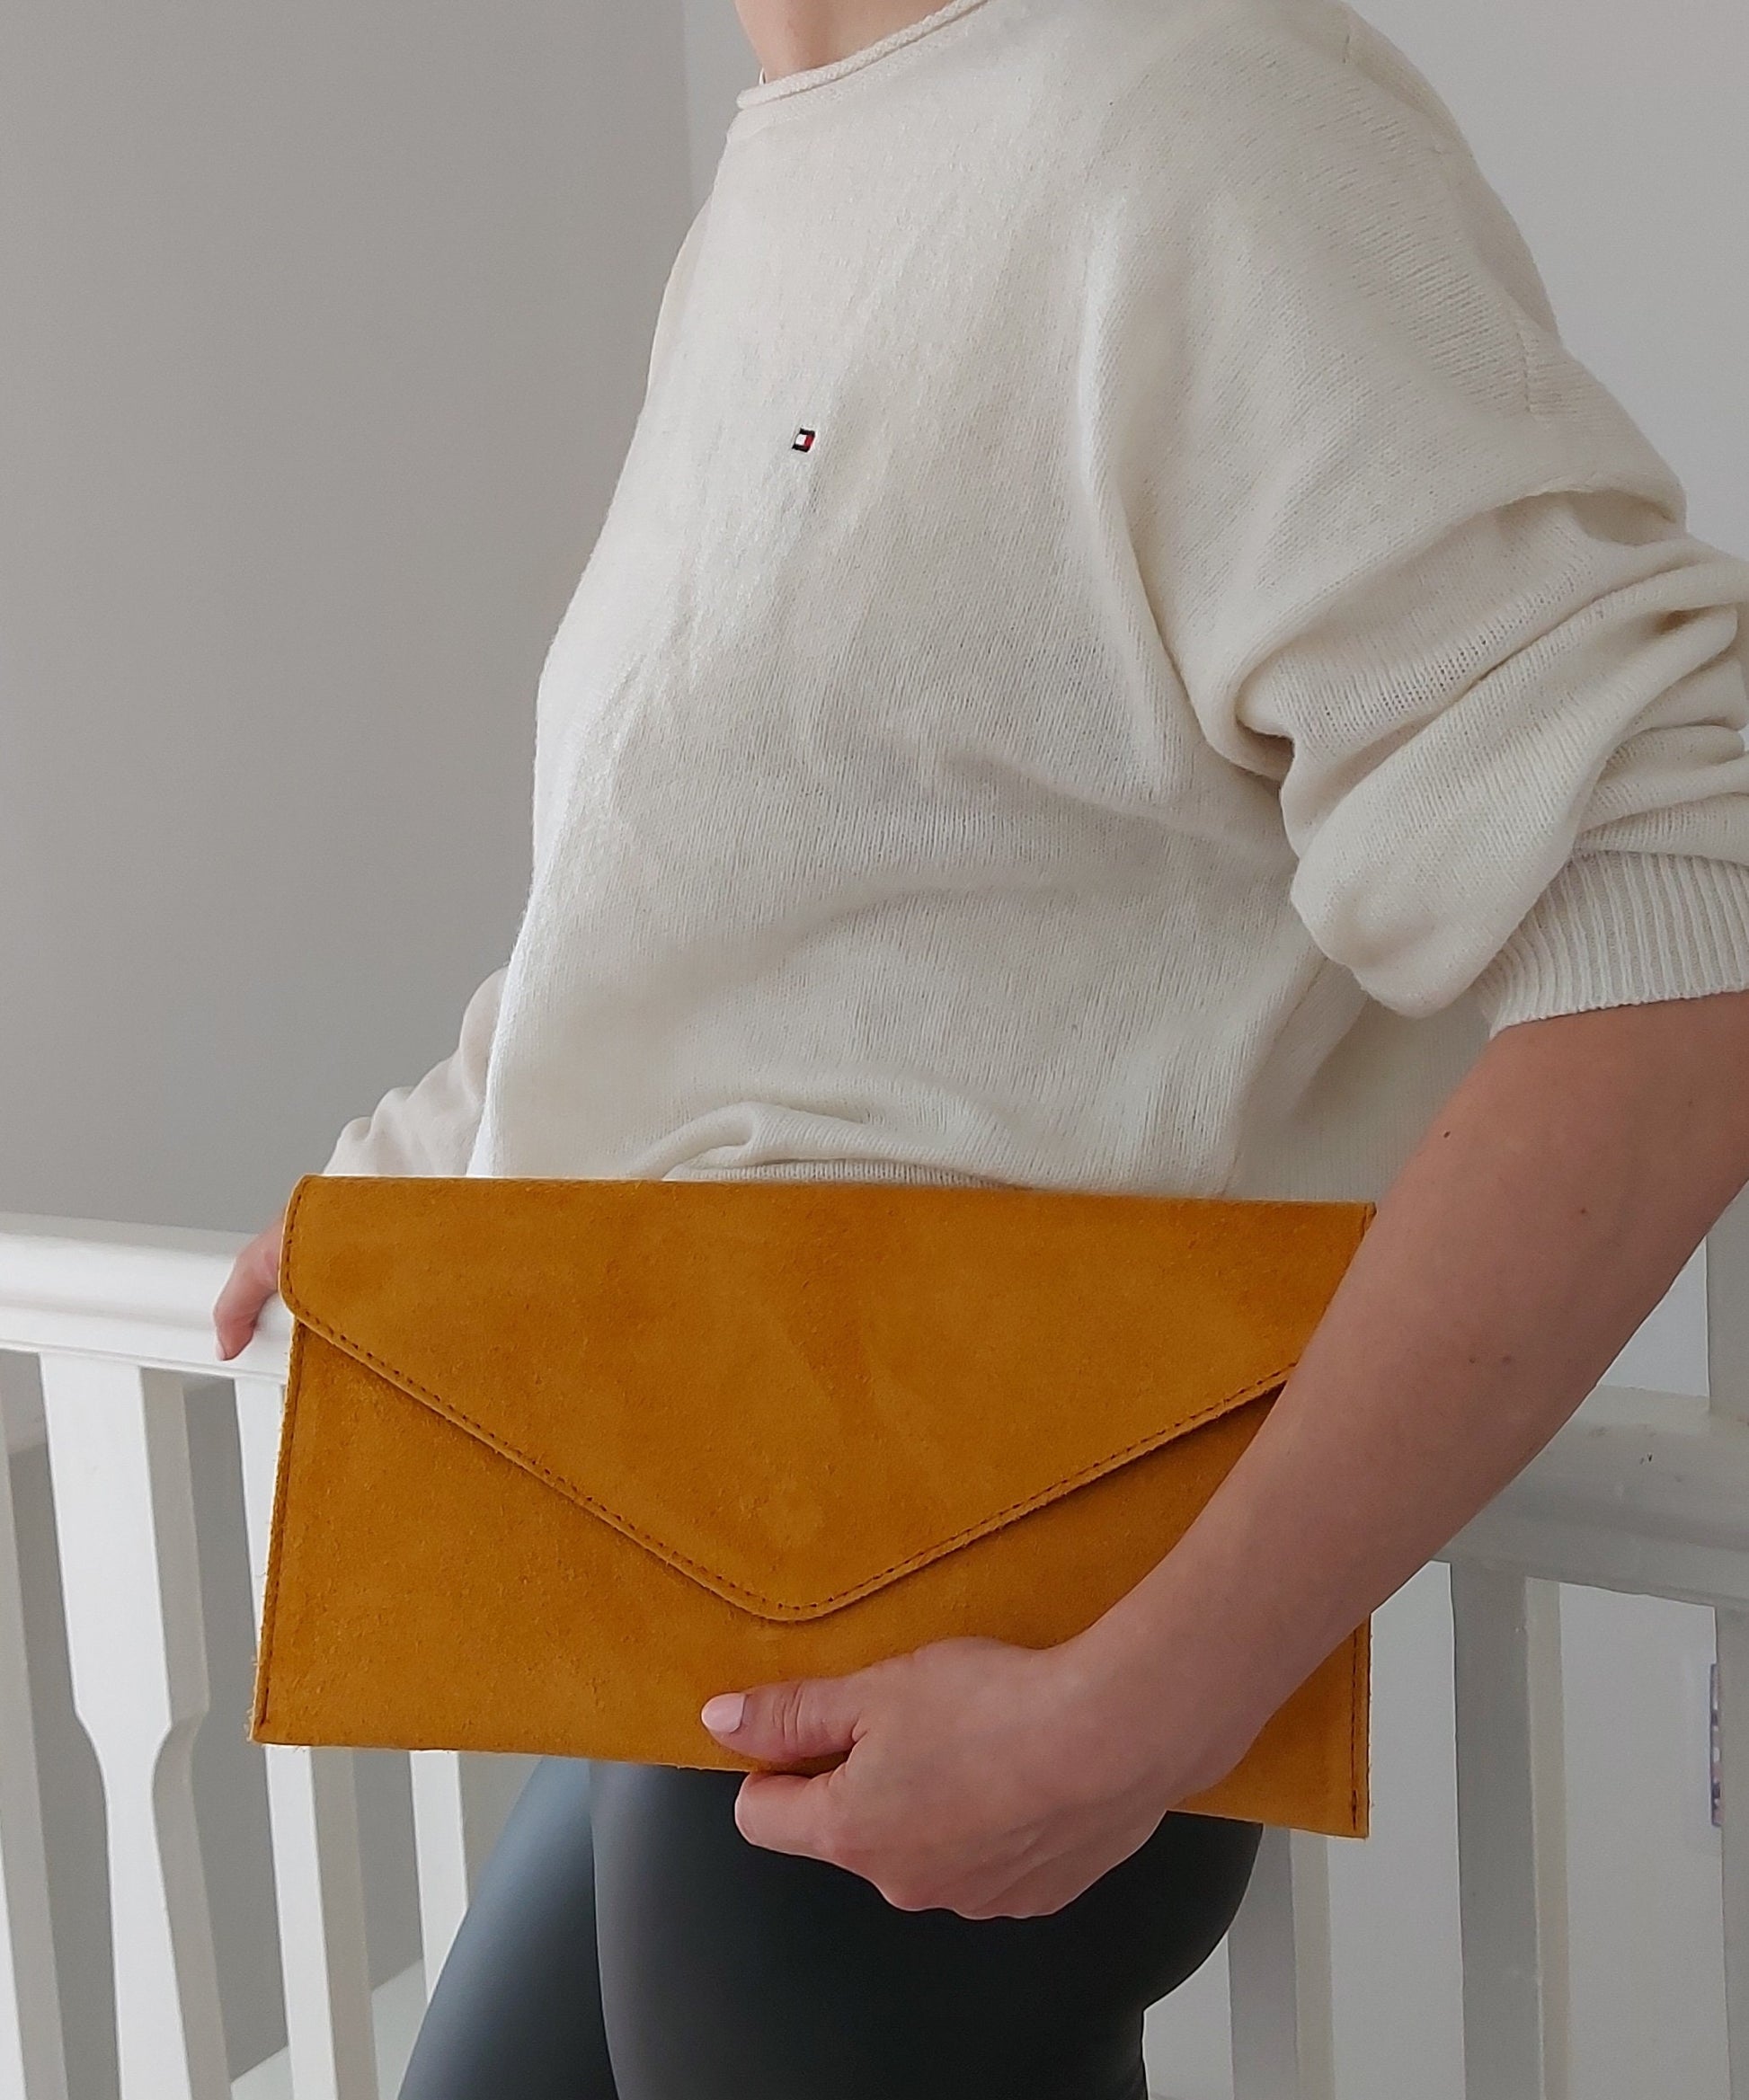 Mustard Envelope Clutch Bag